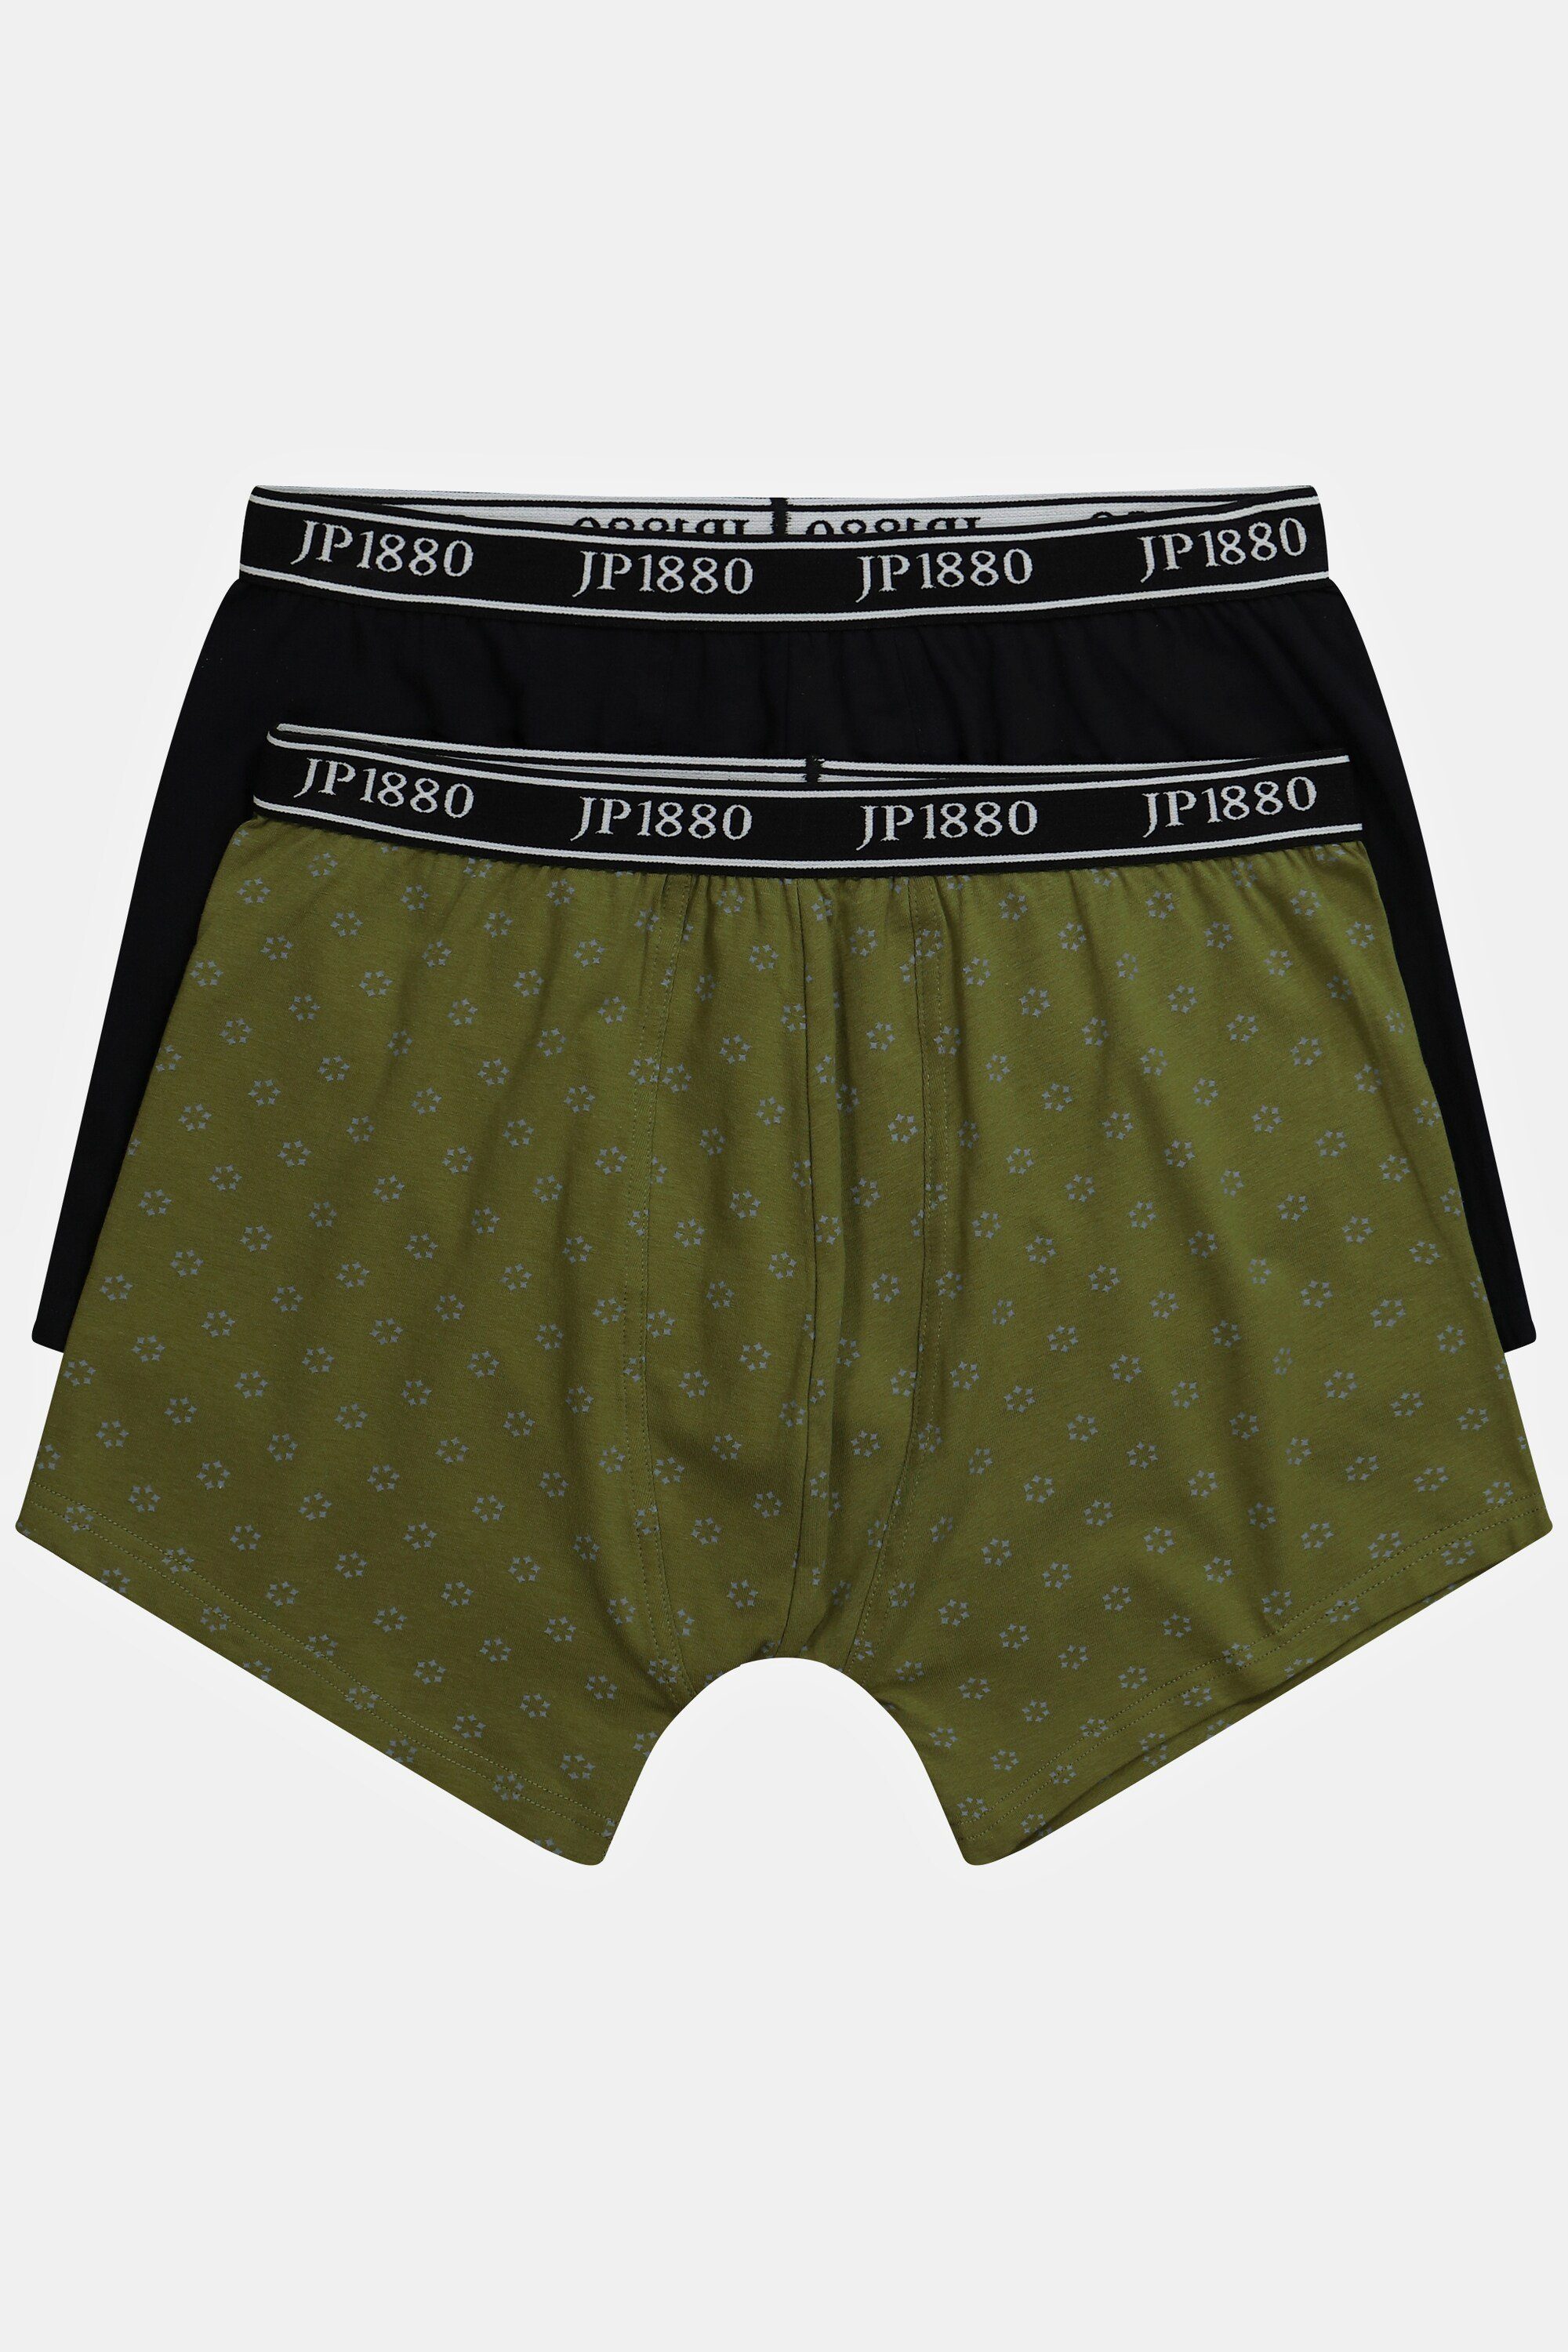 JP1880 Boxershorts Midpants FLEXNAMIC® 2er-Pack Unterhose grün